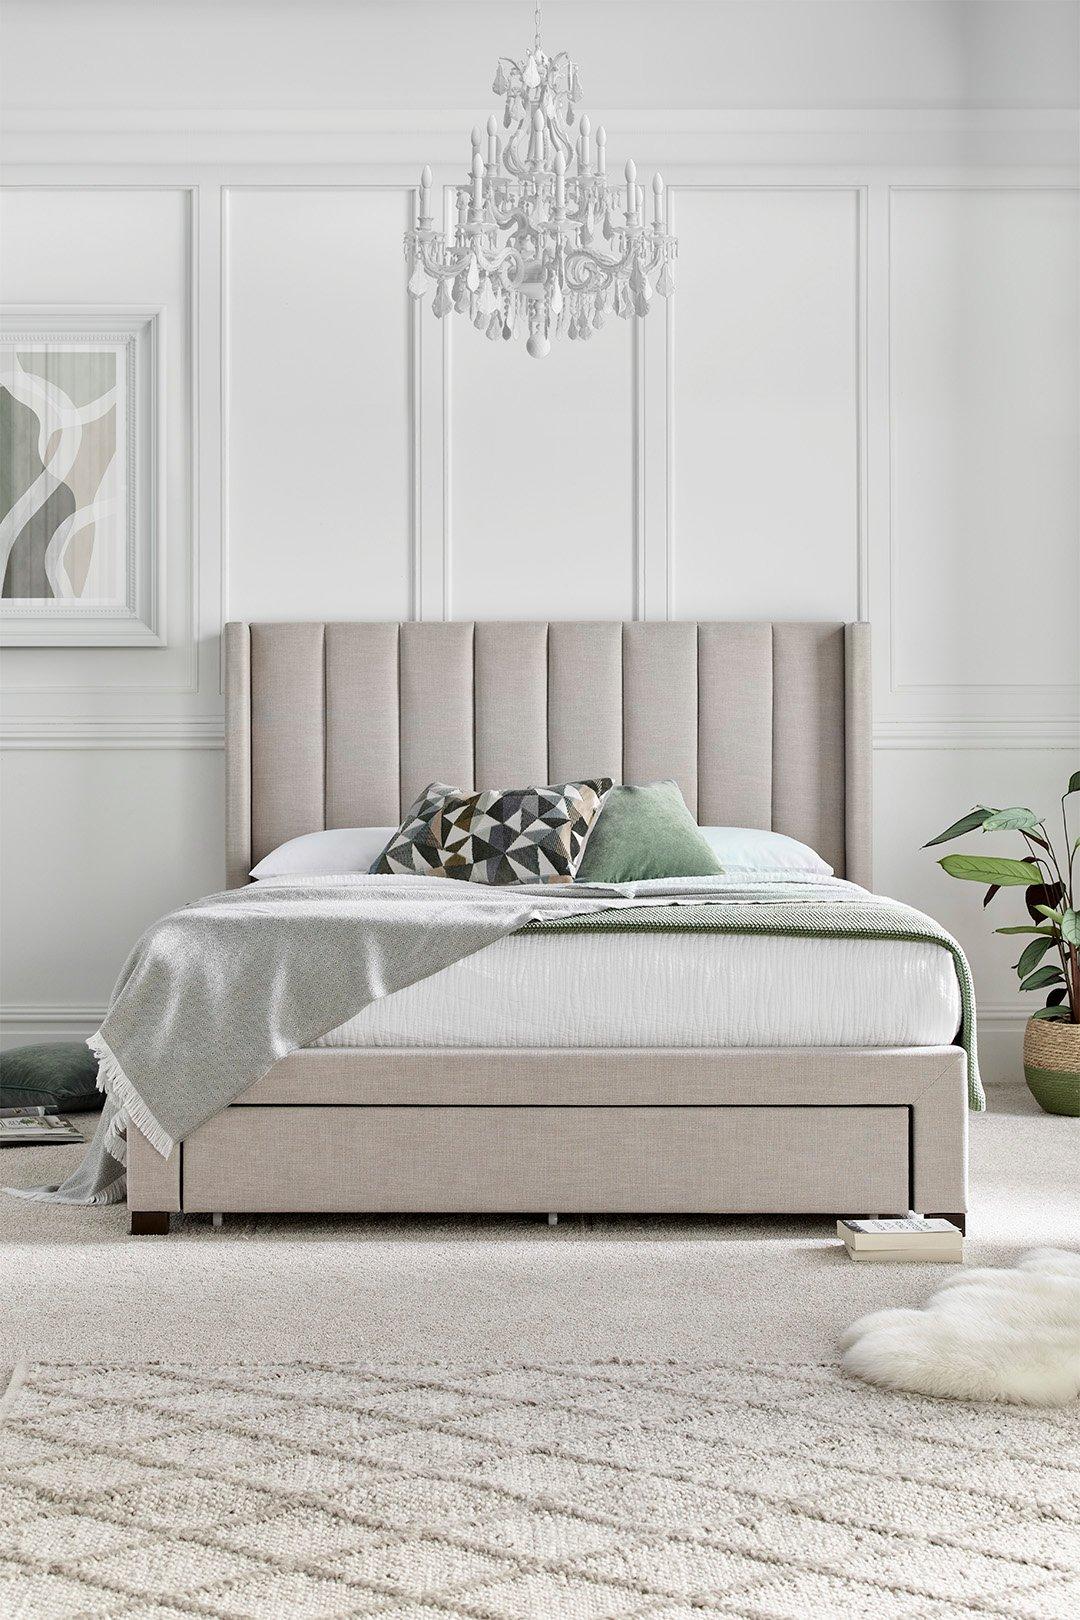 Savannah Natural Oat Upholstered - Bed Frame Only